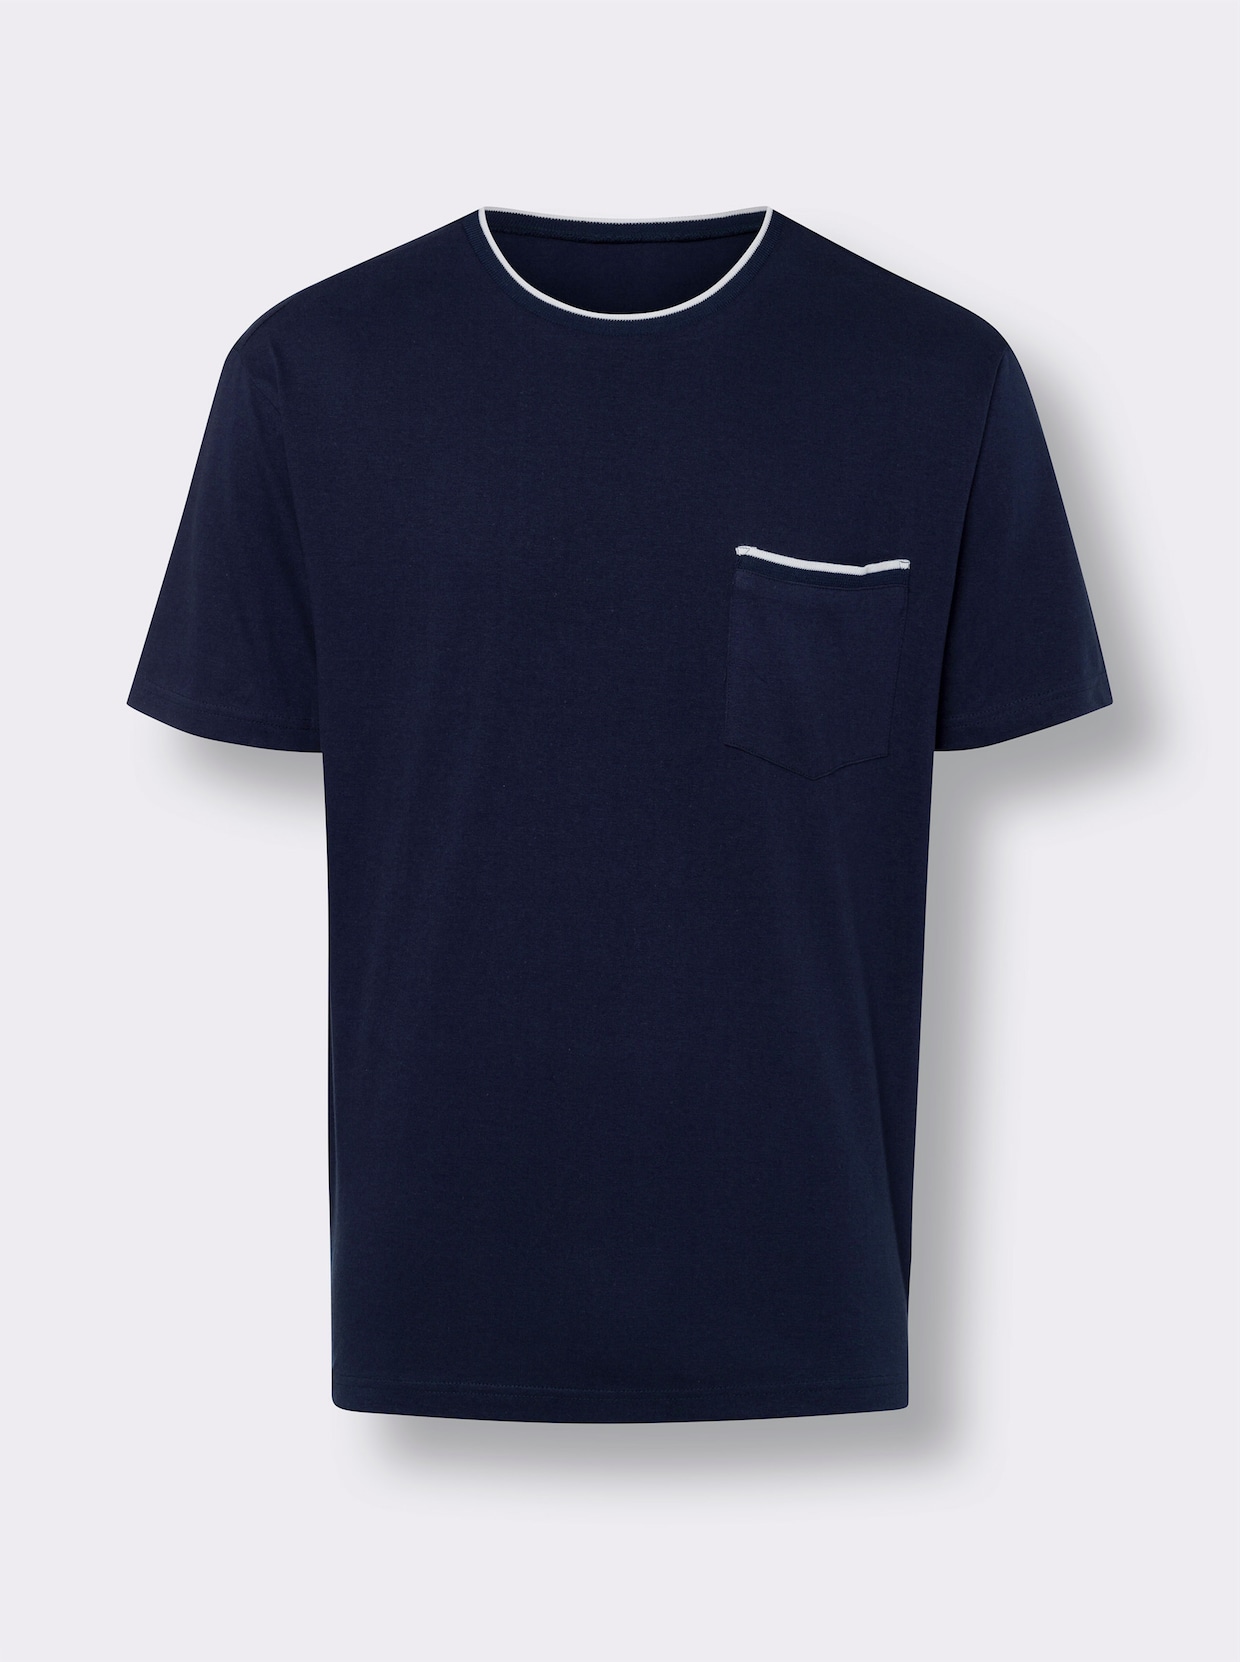 Tričko pro volný čas - námořnická modrá